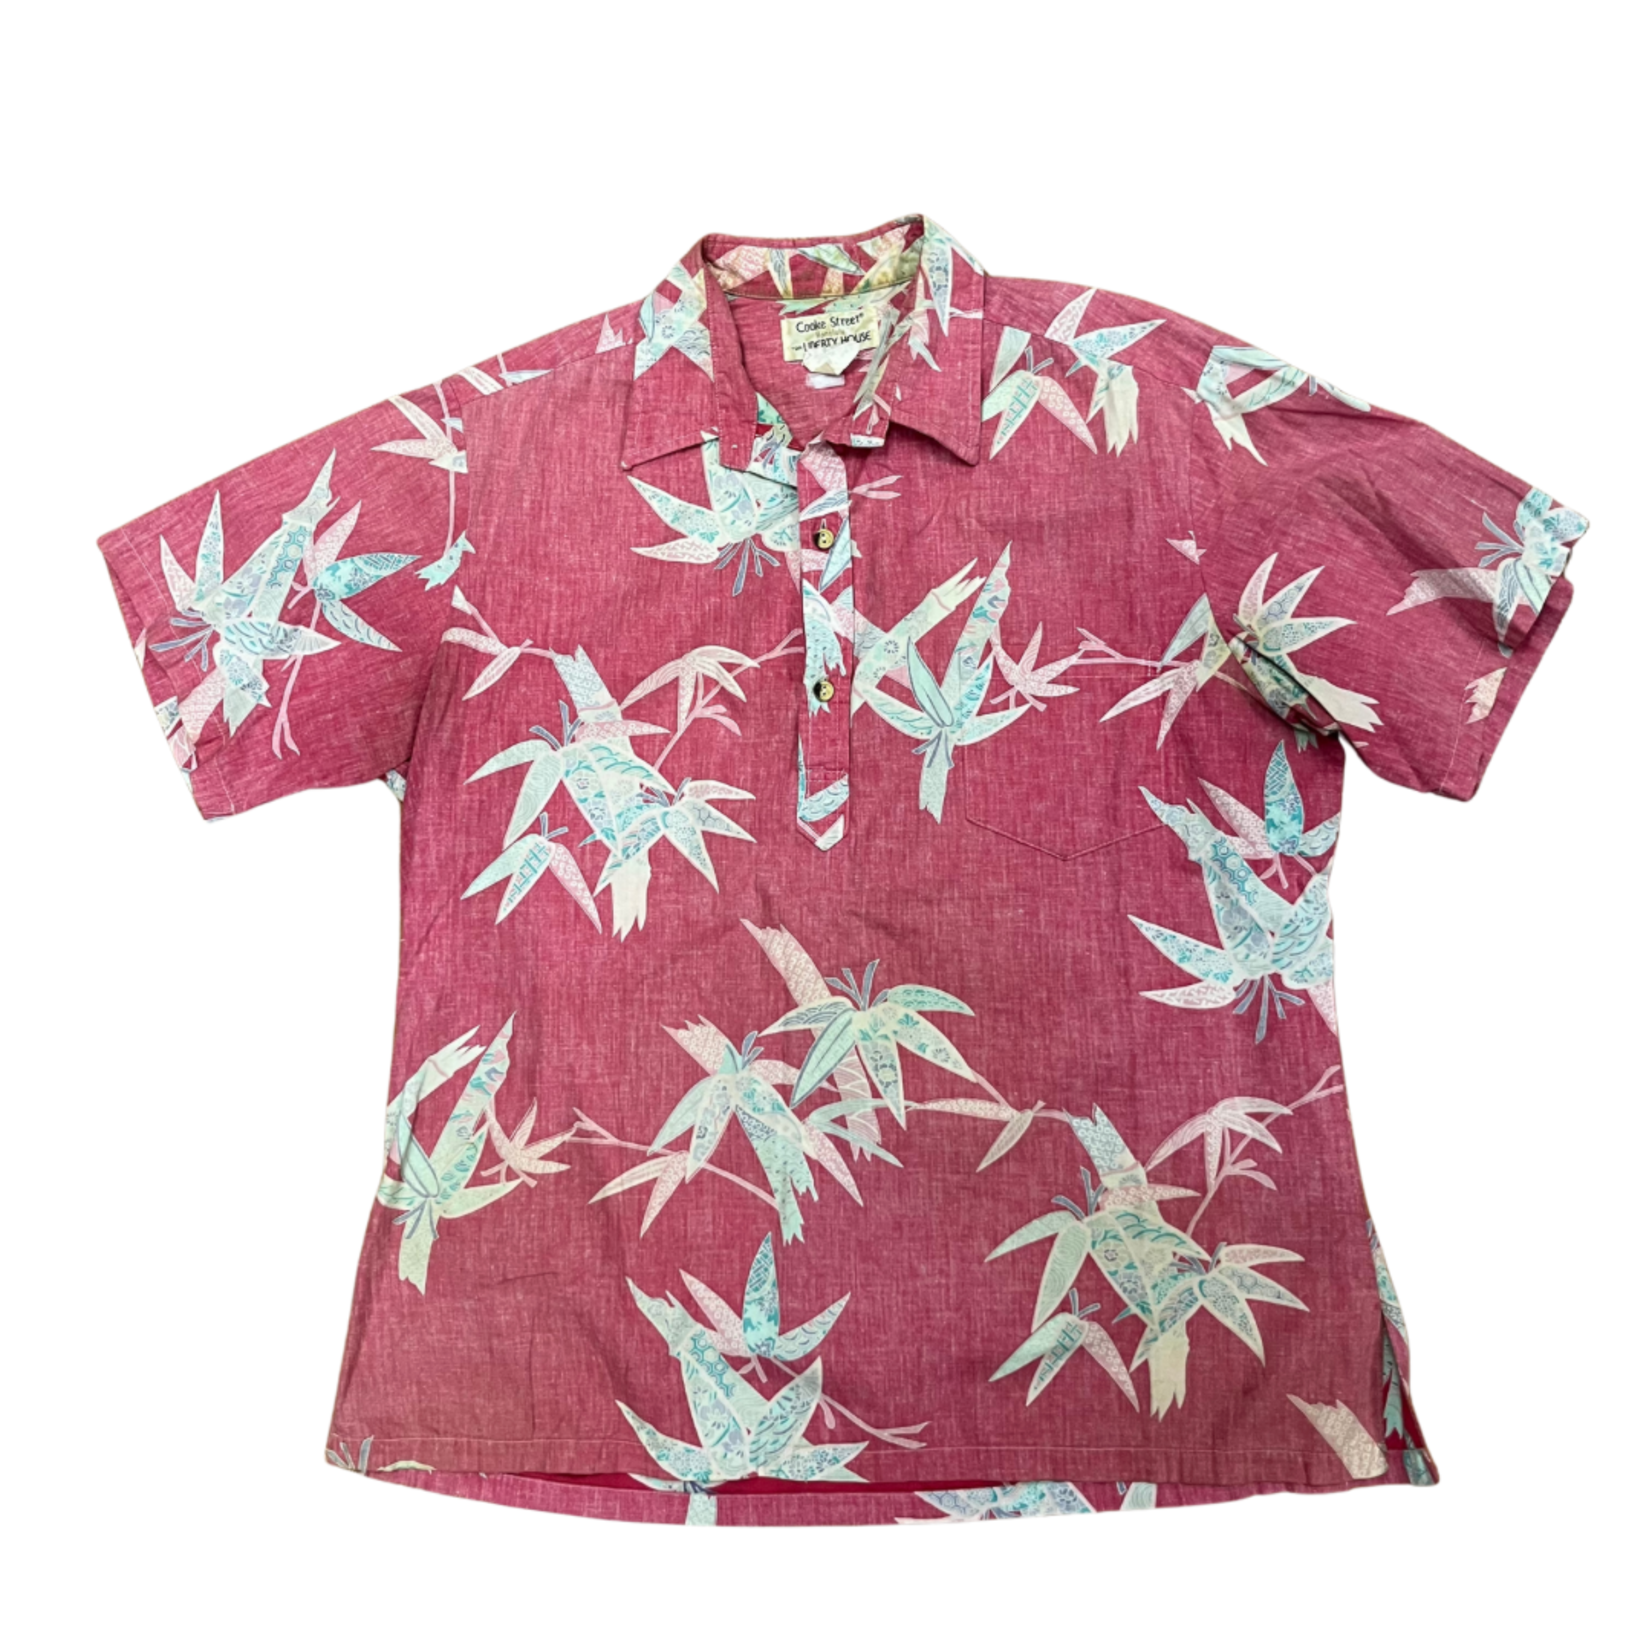 Mission Zero Men’s Vintage Aloha Shirt - Cooke Street Liberty House - Red Bird of Paradise -XL